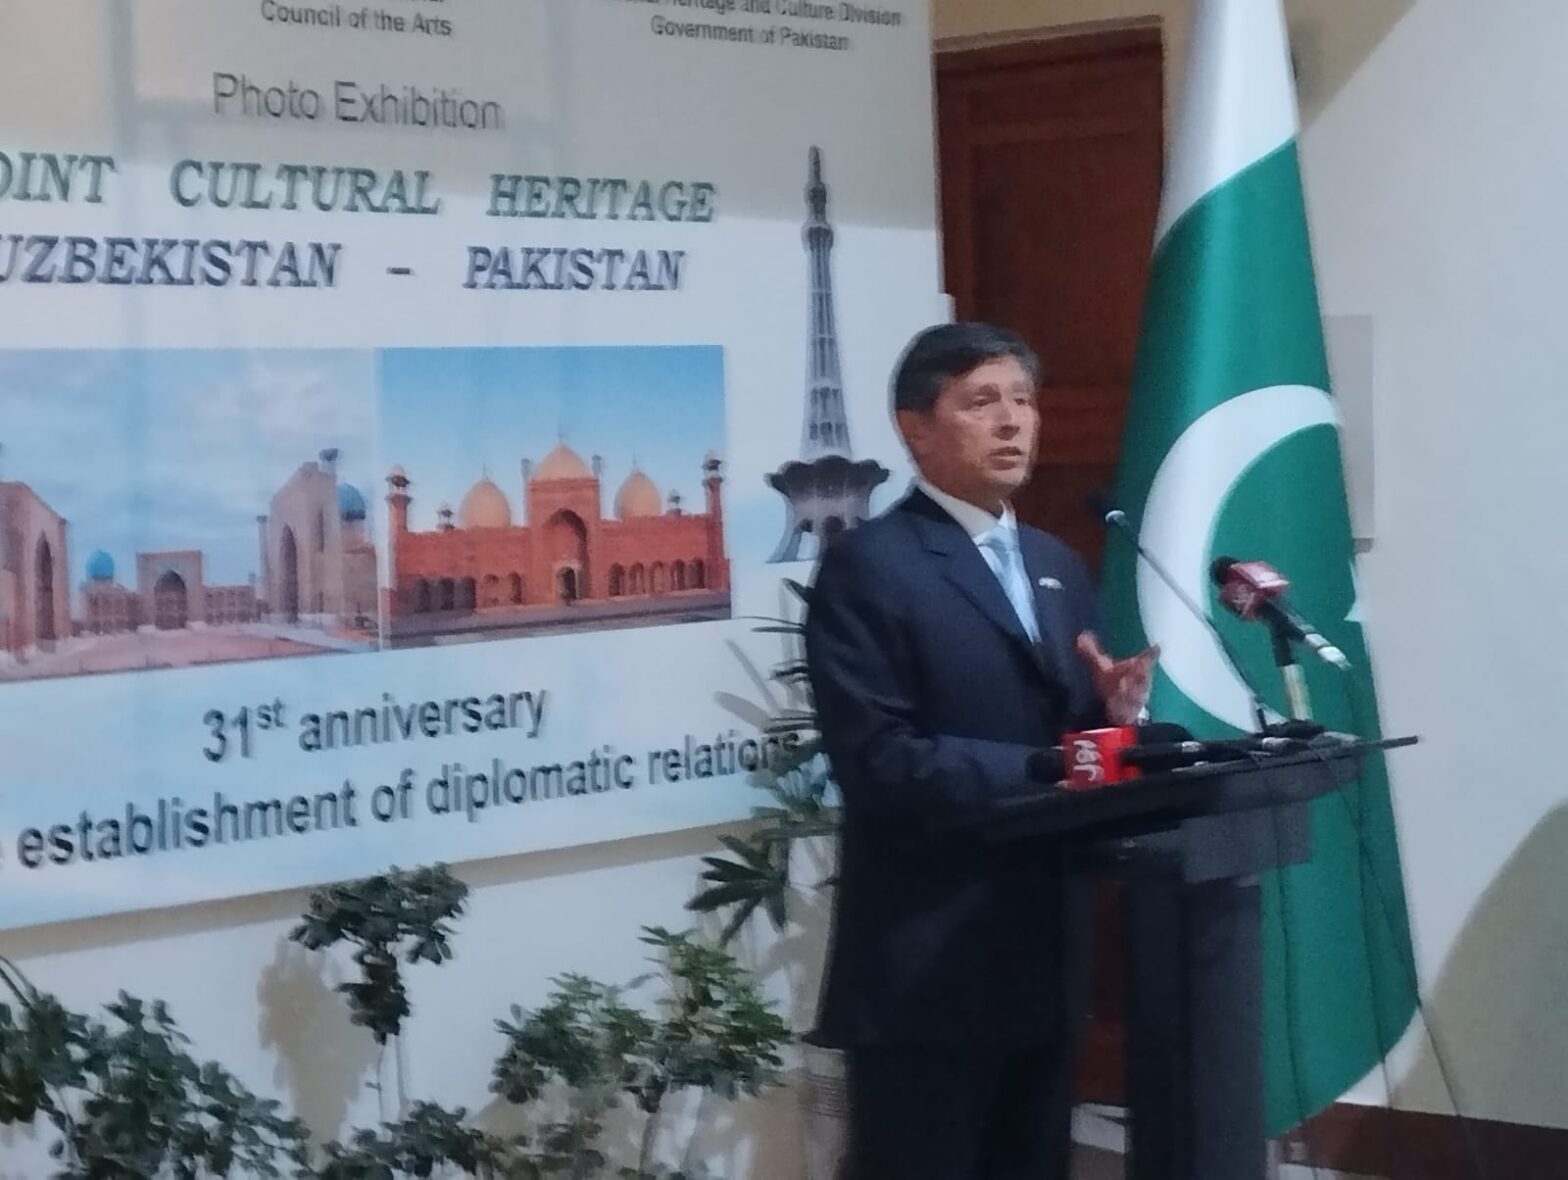 Uzbekistan- Pakistan connected by historical, cultural relationships: Ambassador Usmanov